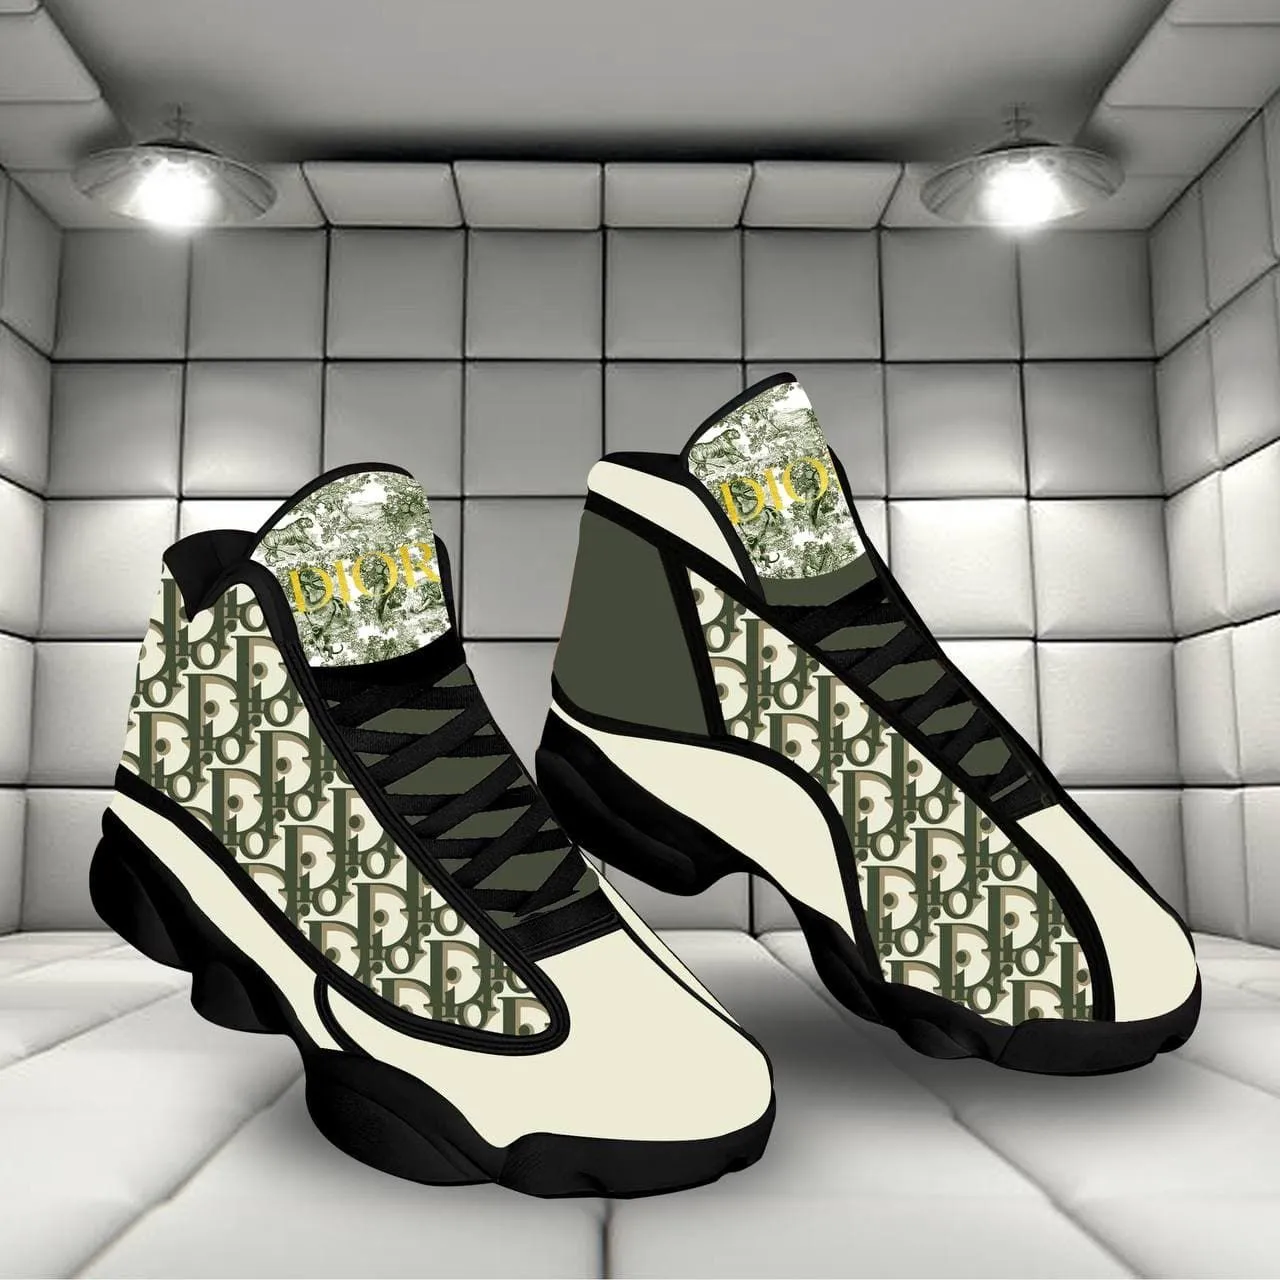 Dior Air Jordan 13 Sneakers Luxury Shoes Trending Fashion